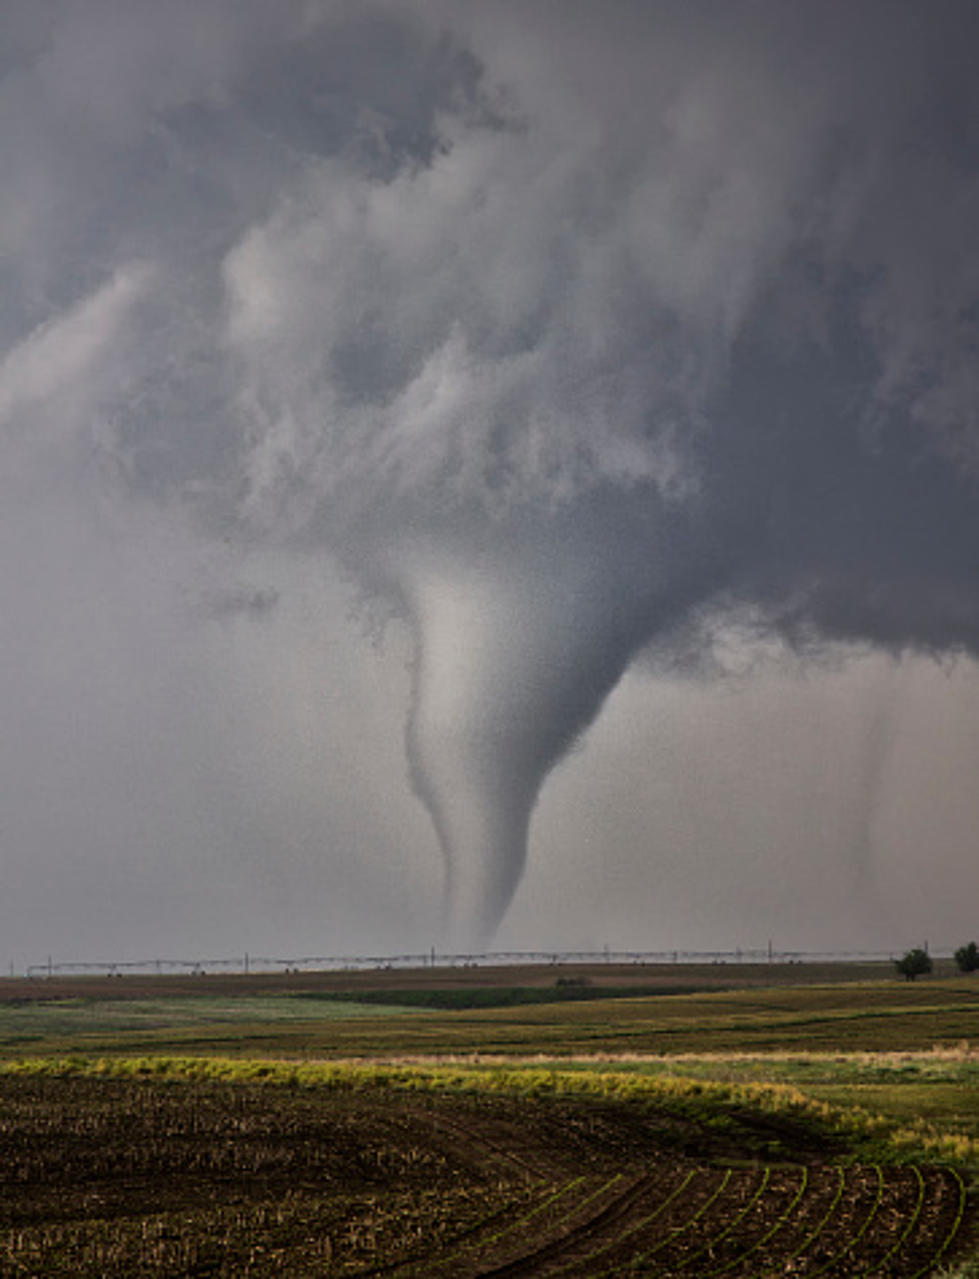 Videos Show Tornado Tearing Into Sycamore Yesterday